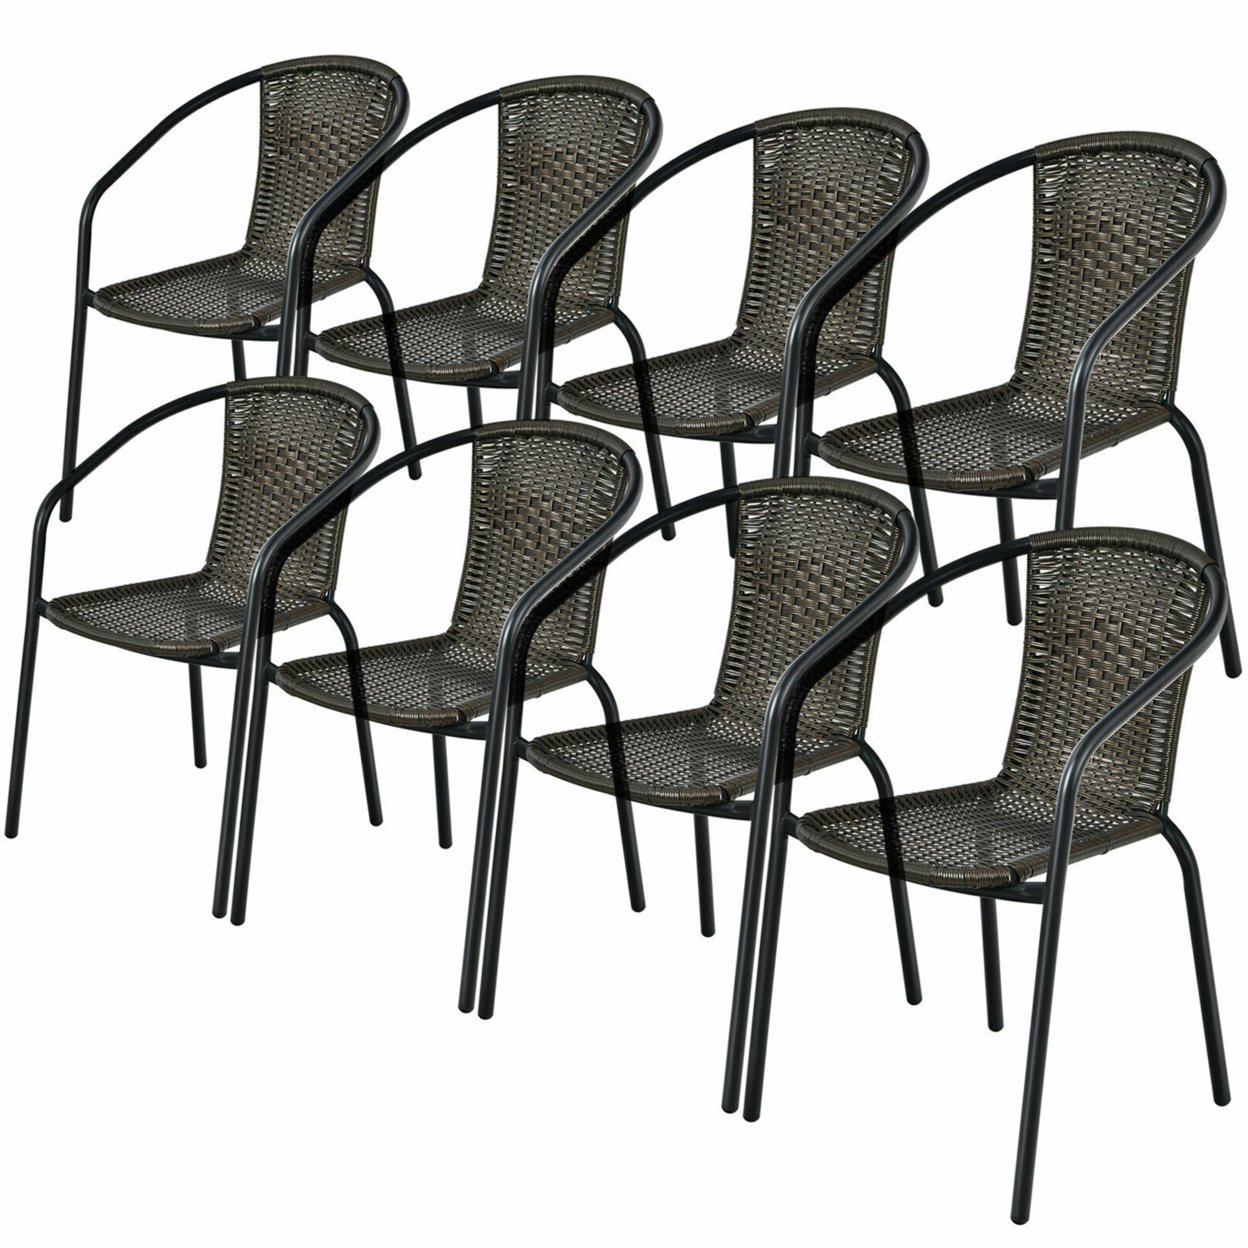 Gymax Patio Rattan Dining Chair Outdoor Stackable Armchair Yard Garden - Black, 8 Pcs